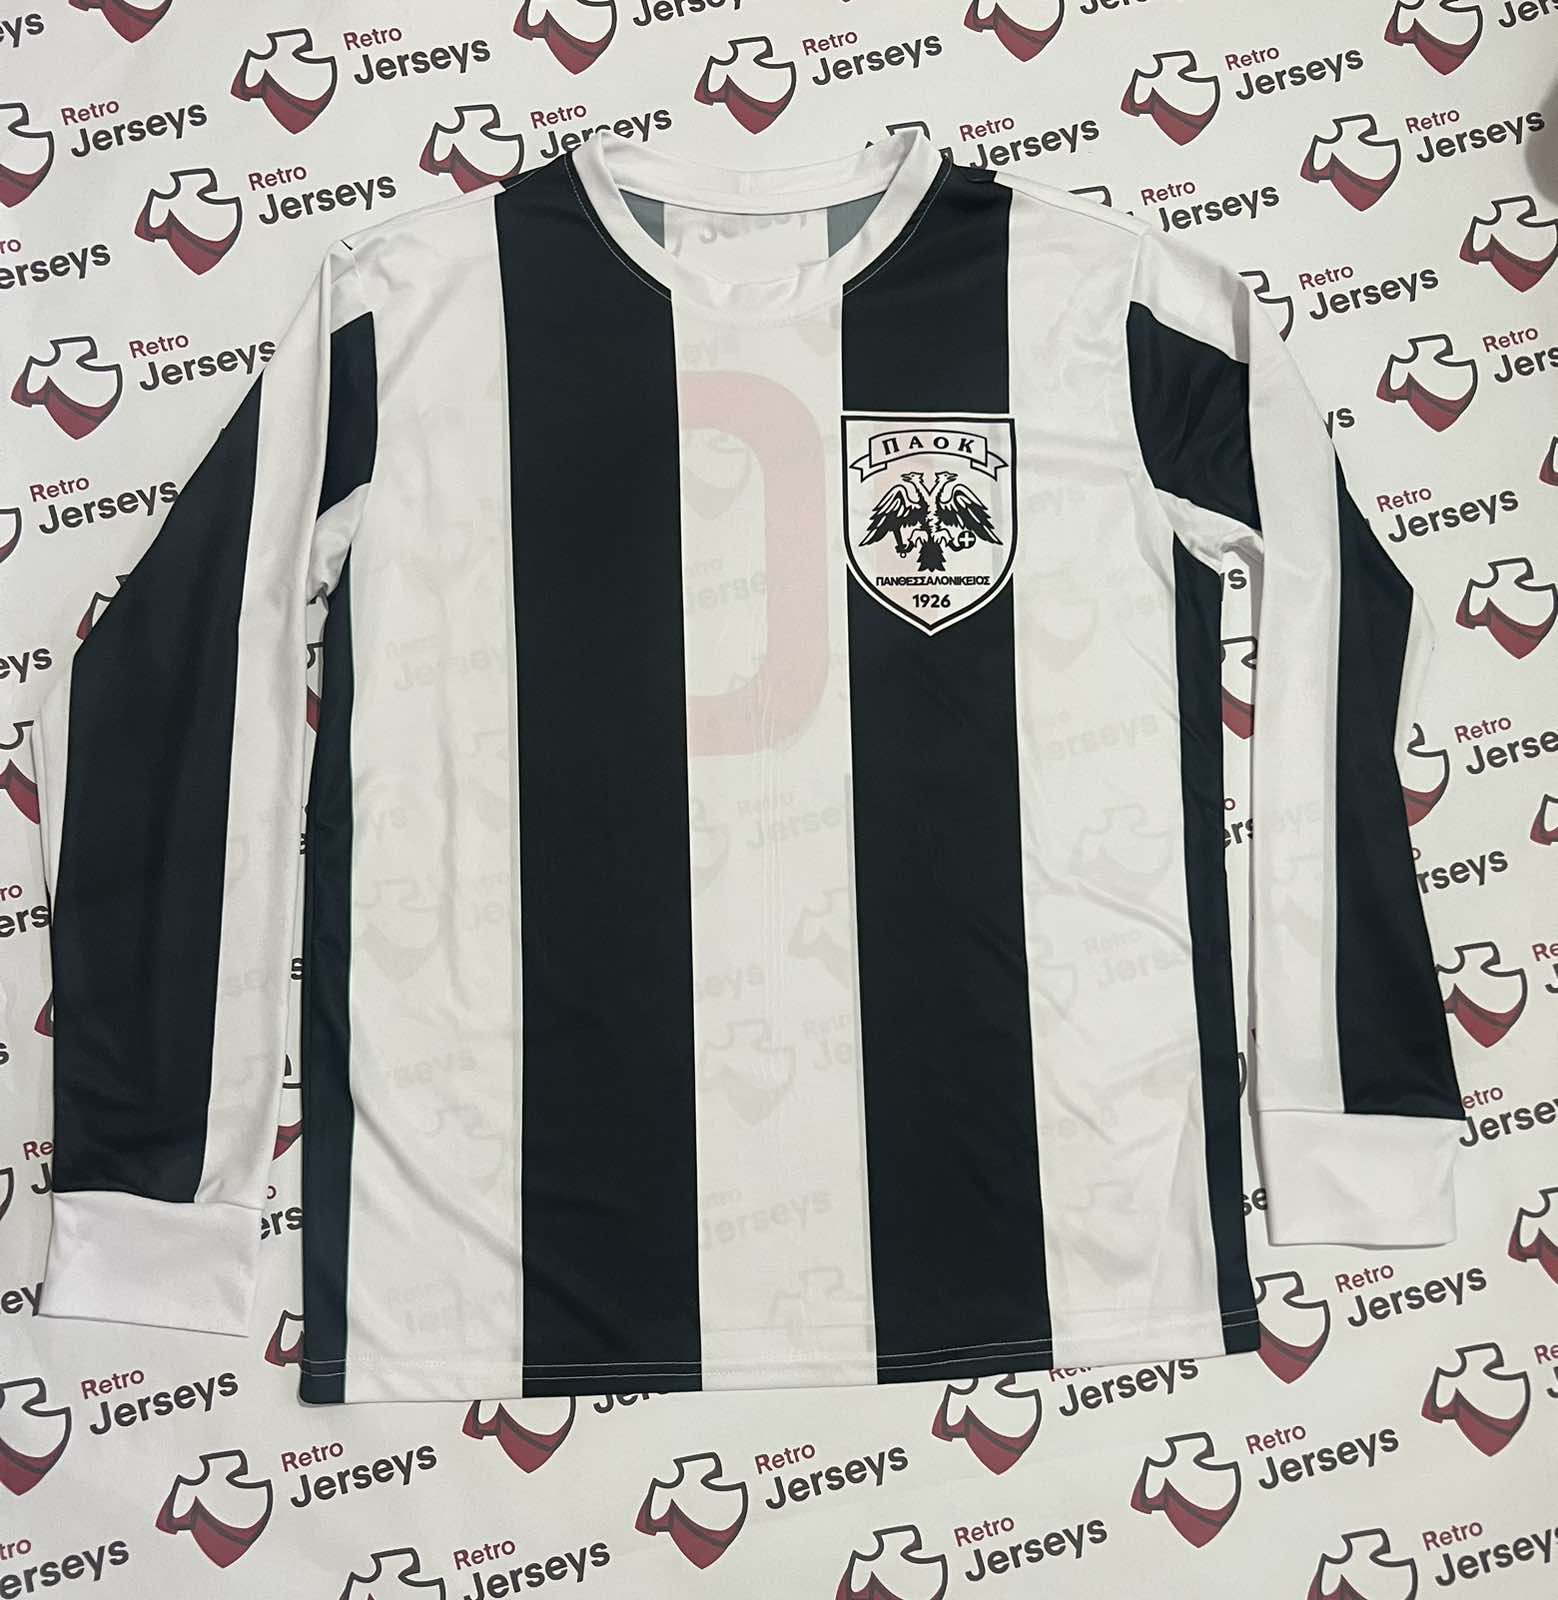 PAOK FC Shirt 1976 Champions League - Retro Jerseys, φανέλα ΠΑΟΚ - Retro Jerseys